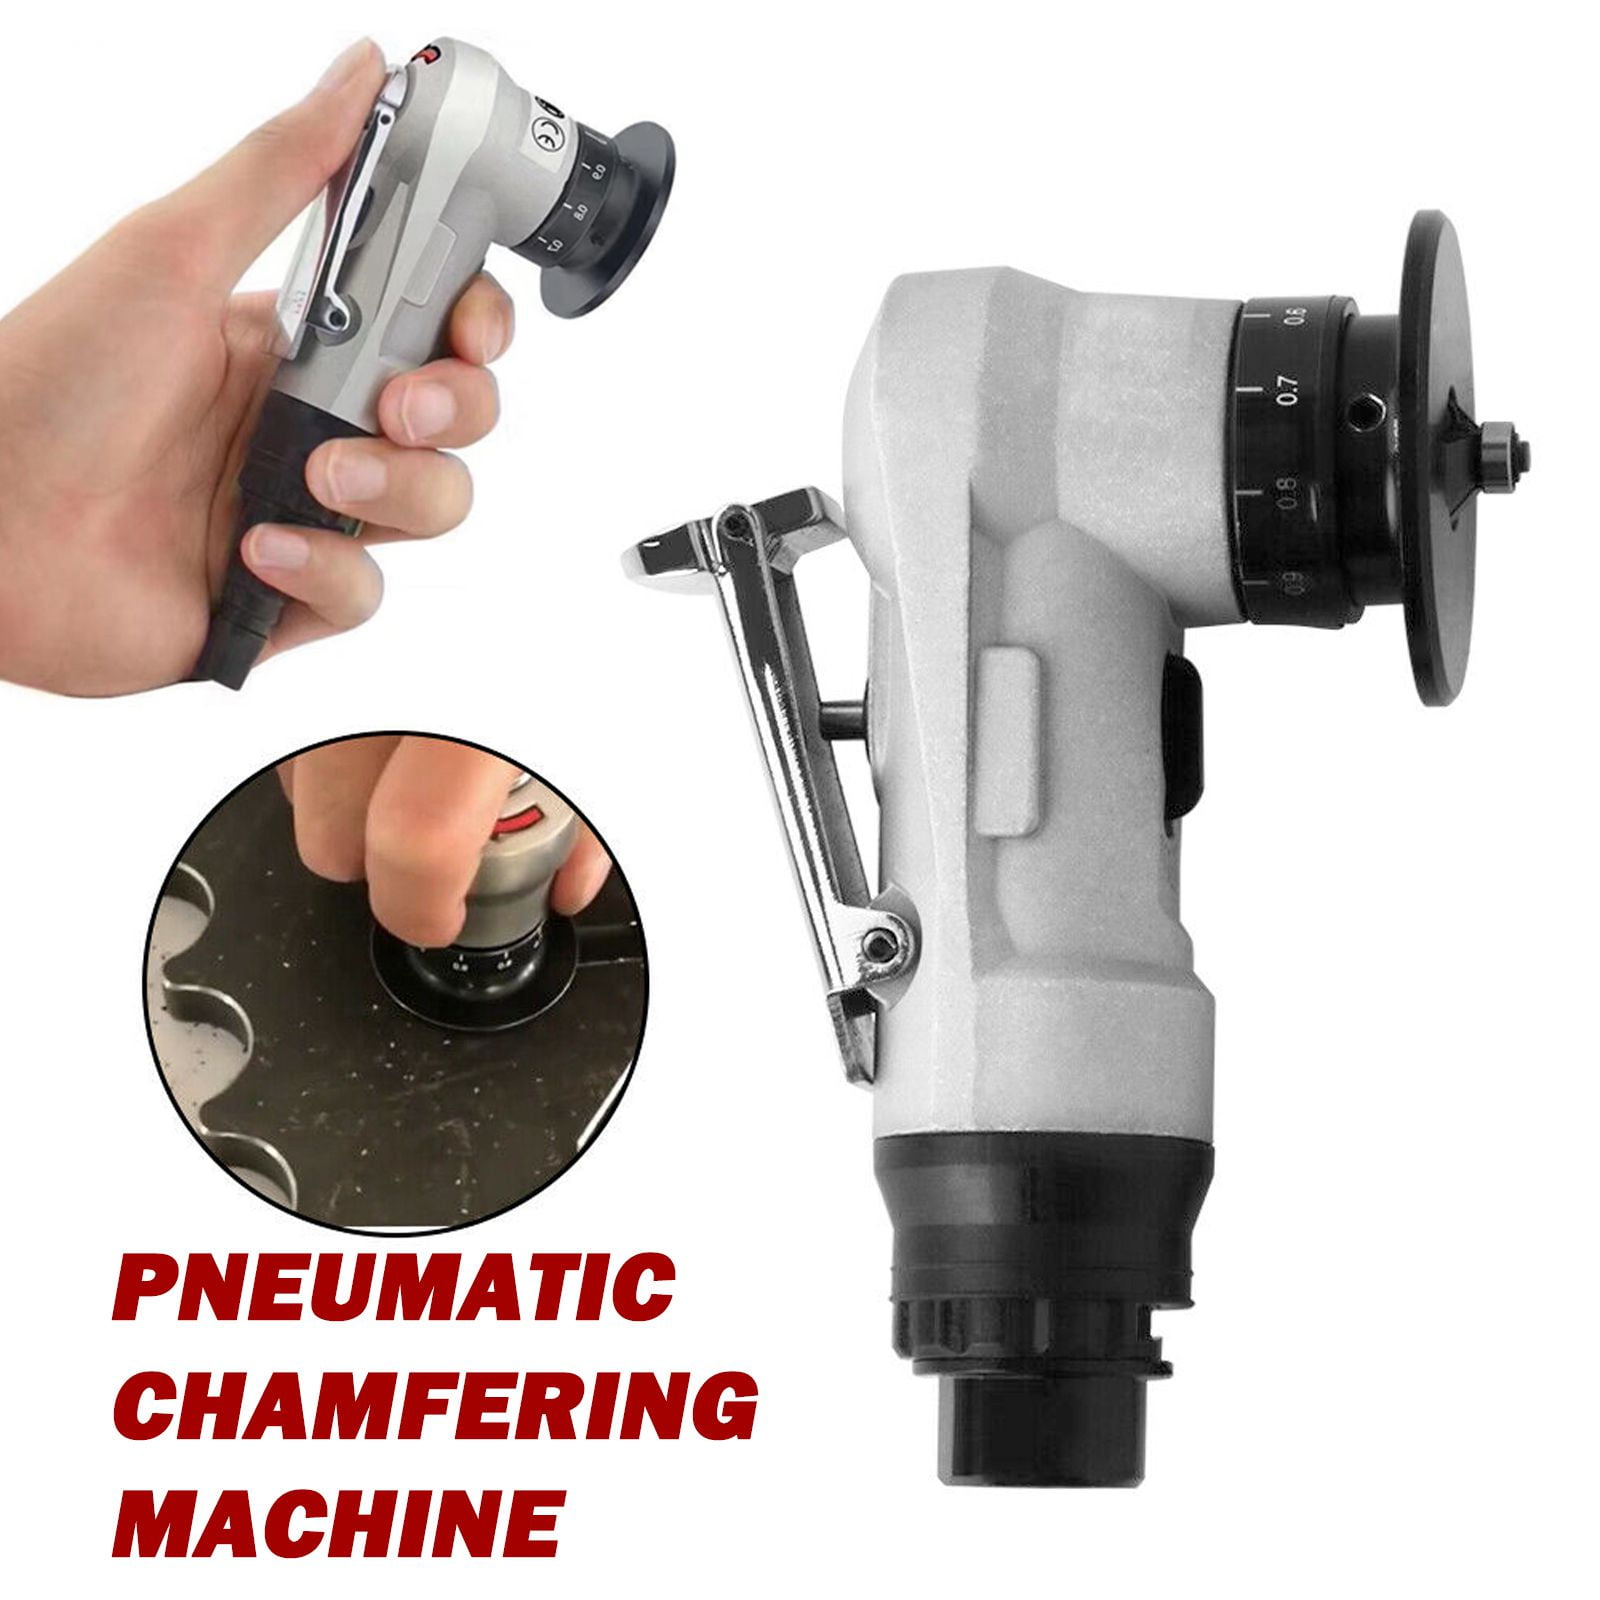 Pneumatic Chamfering Machine Mini Portable Metal Burr Trimming Air Tool 30000RPM 